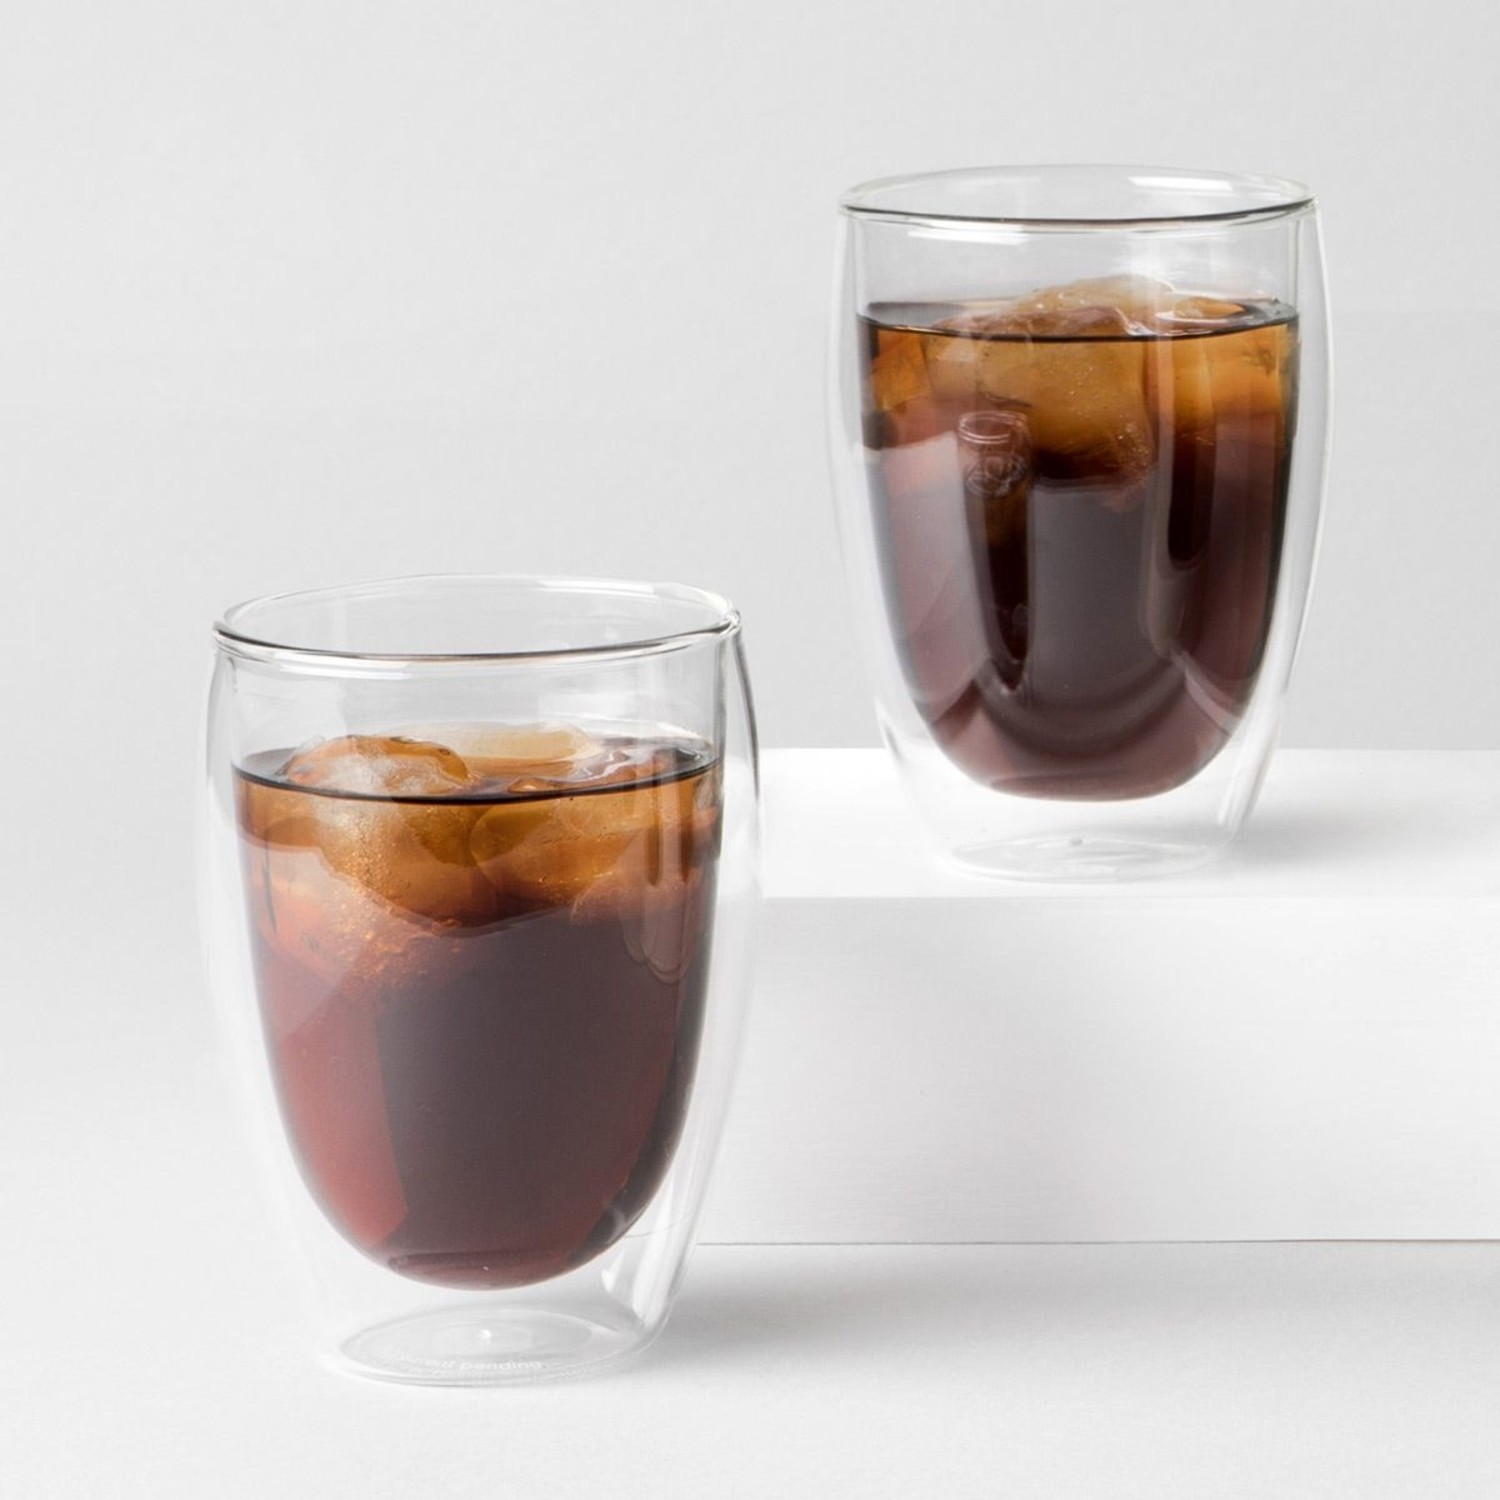 Pavina Double Wall Glass Cups (Set of 2)